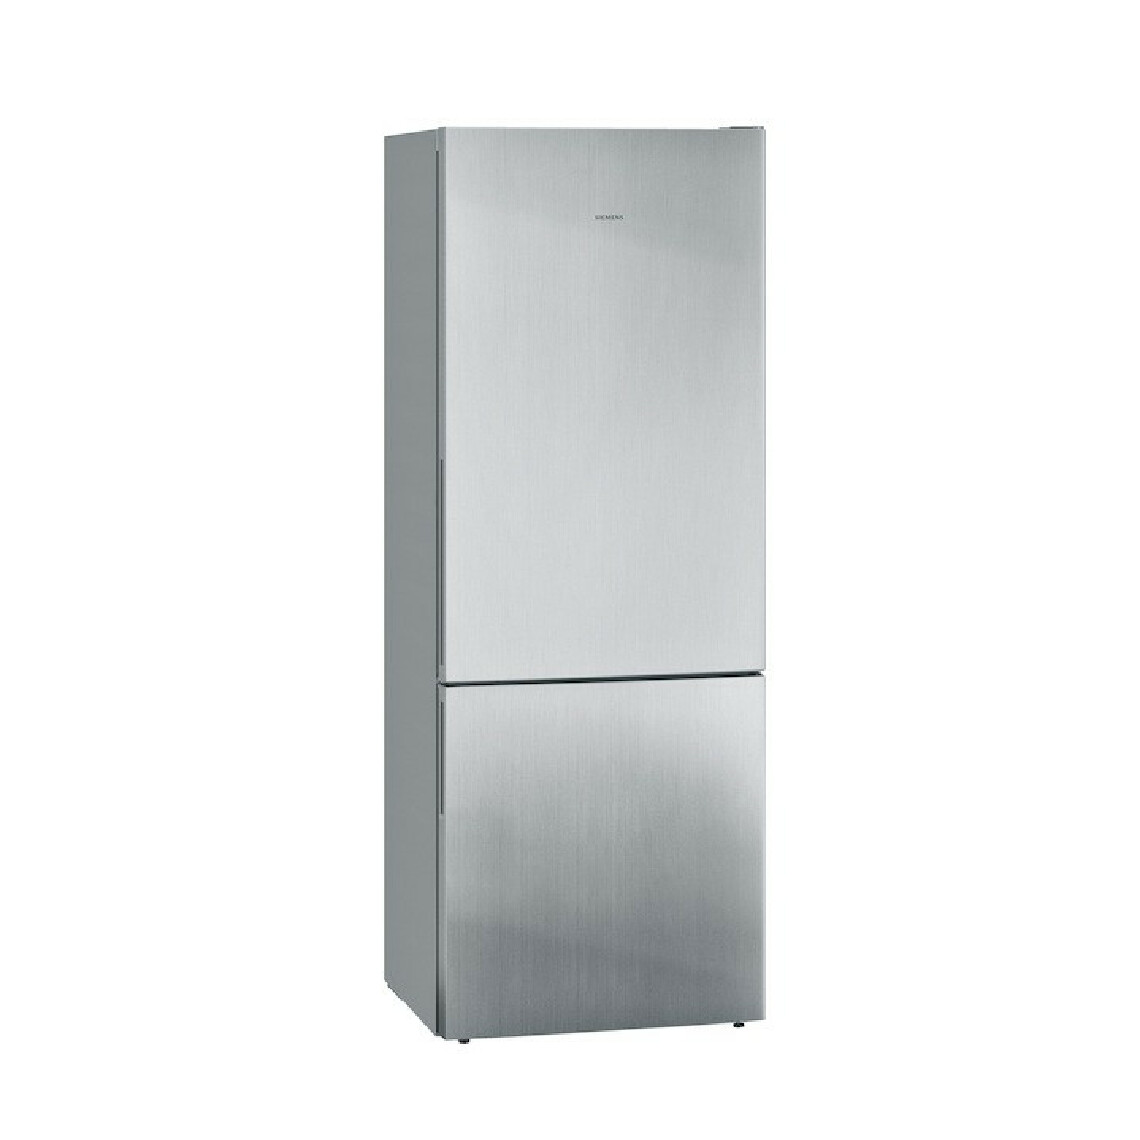 Siemens - siemens - kg49eaica - Réfrigérateur